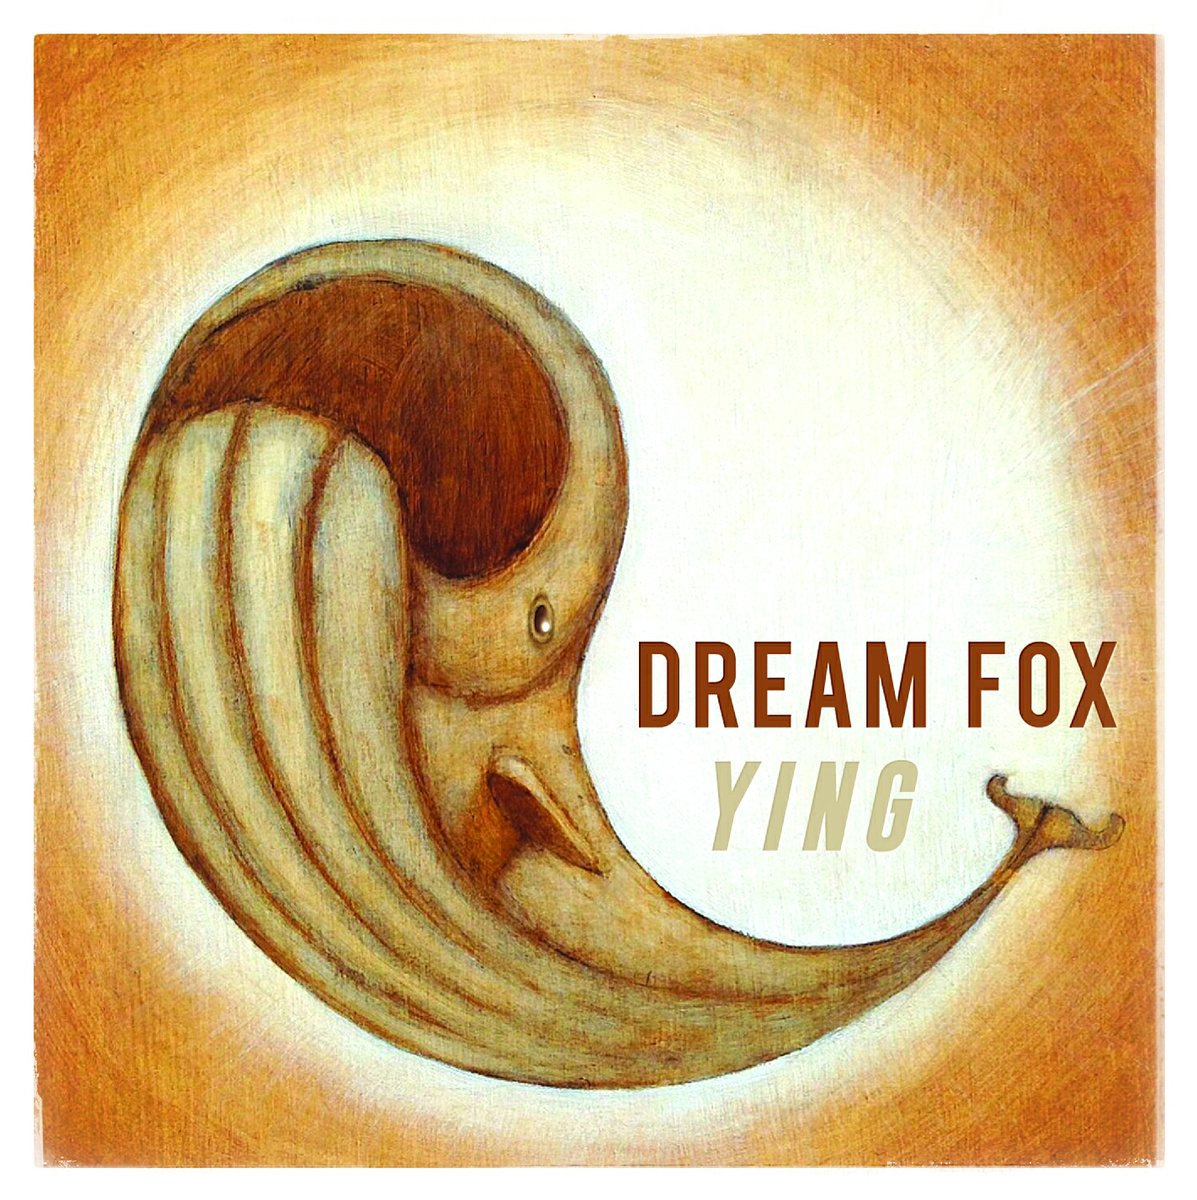 Fox dreaming. Dreaming Fox. Dream Fox.